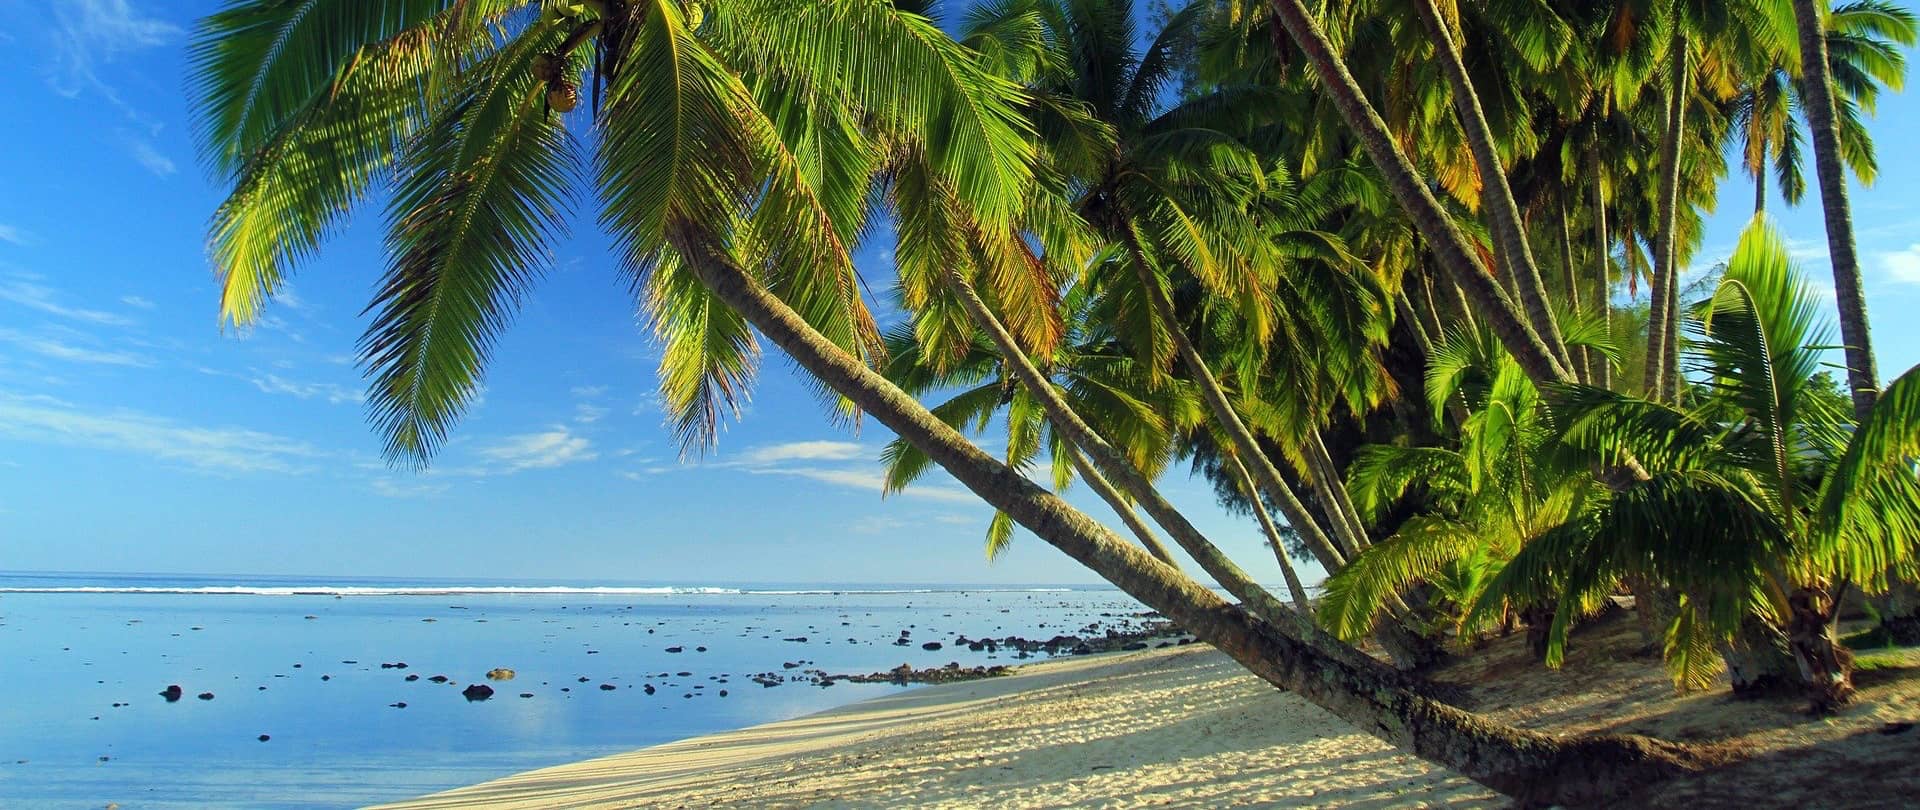 Palmeiras exuberantes se inclinam sobre uma praia arenosa na deslumbrante costa das Ilhas Cook